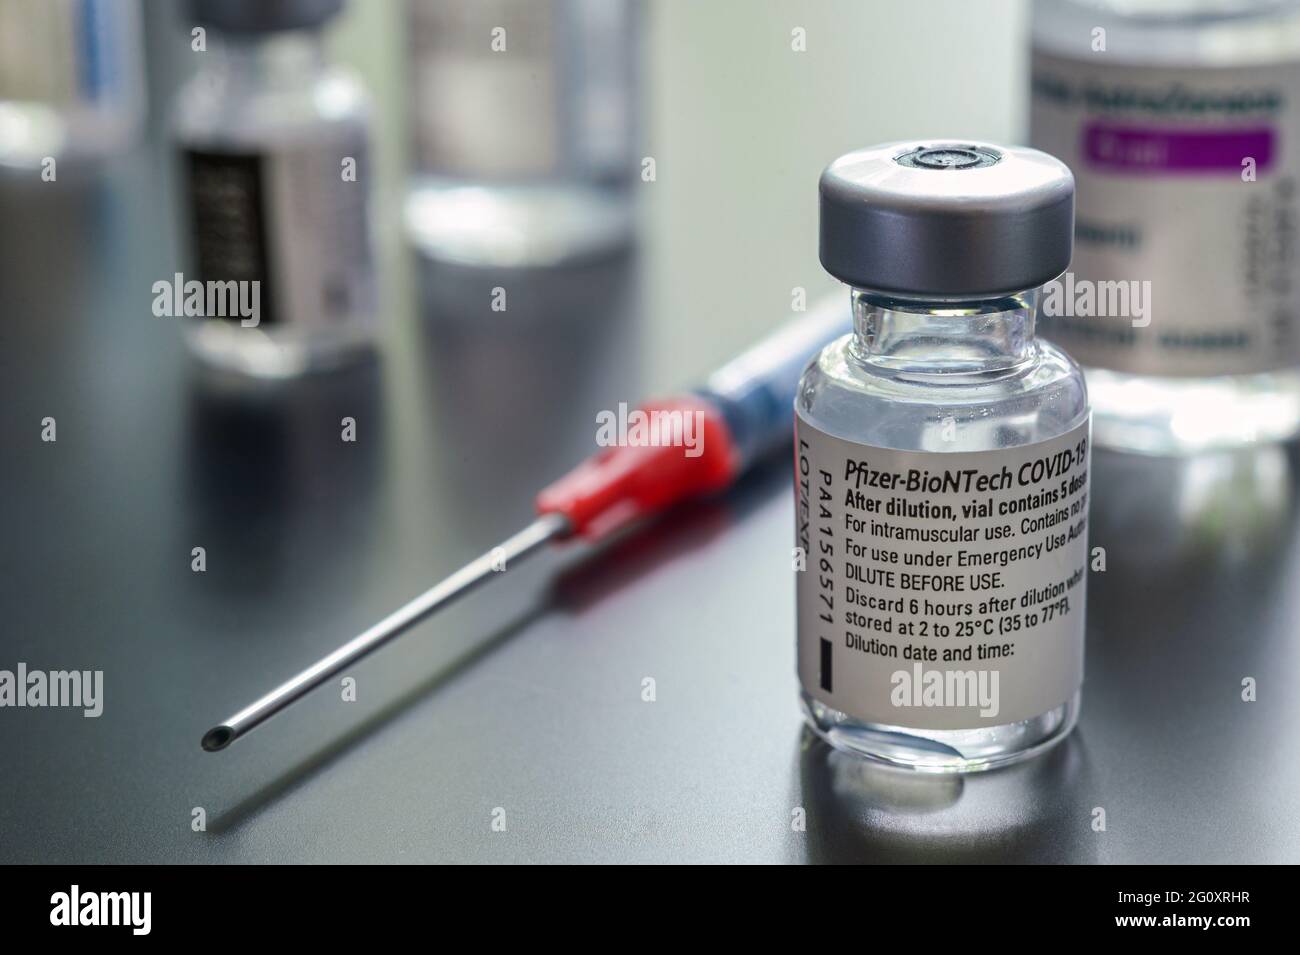 Montreal, CA - 3 June 2021: Vial of Pfizer-BioNTech Covid-19 vaccine among other Coronavirus vaccine vials Stock Photo